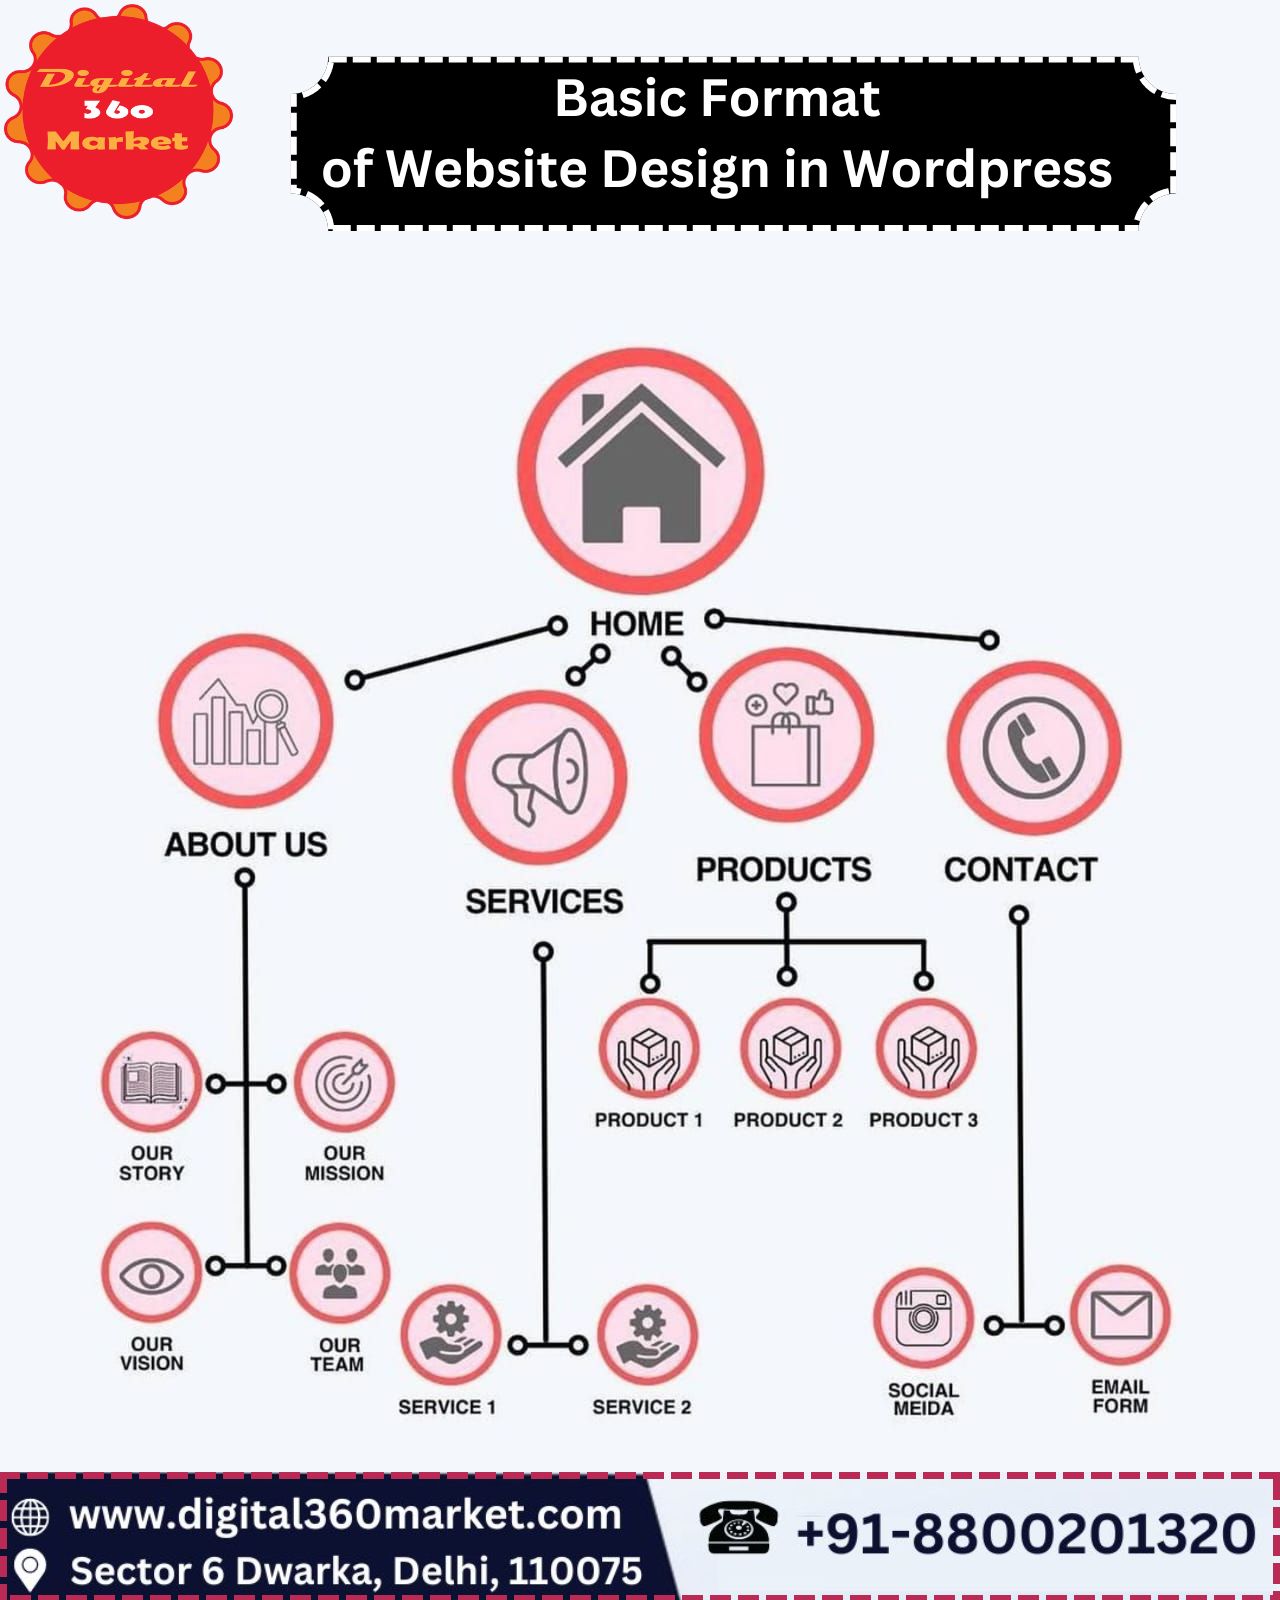 Basic Format of Website Design in Wordpress